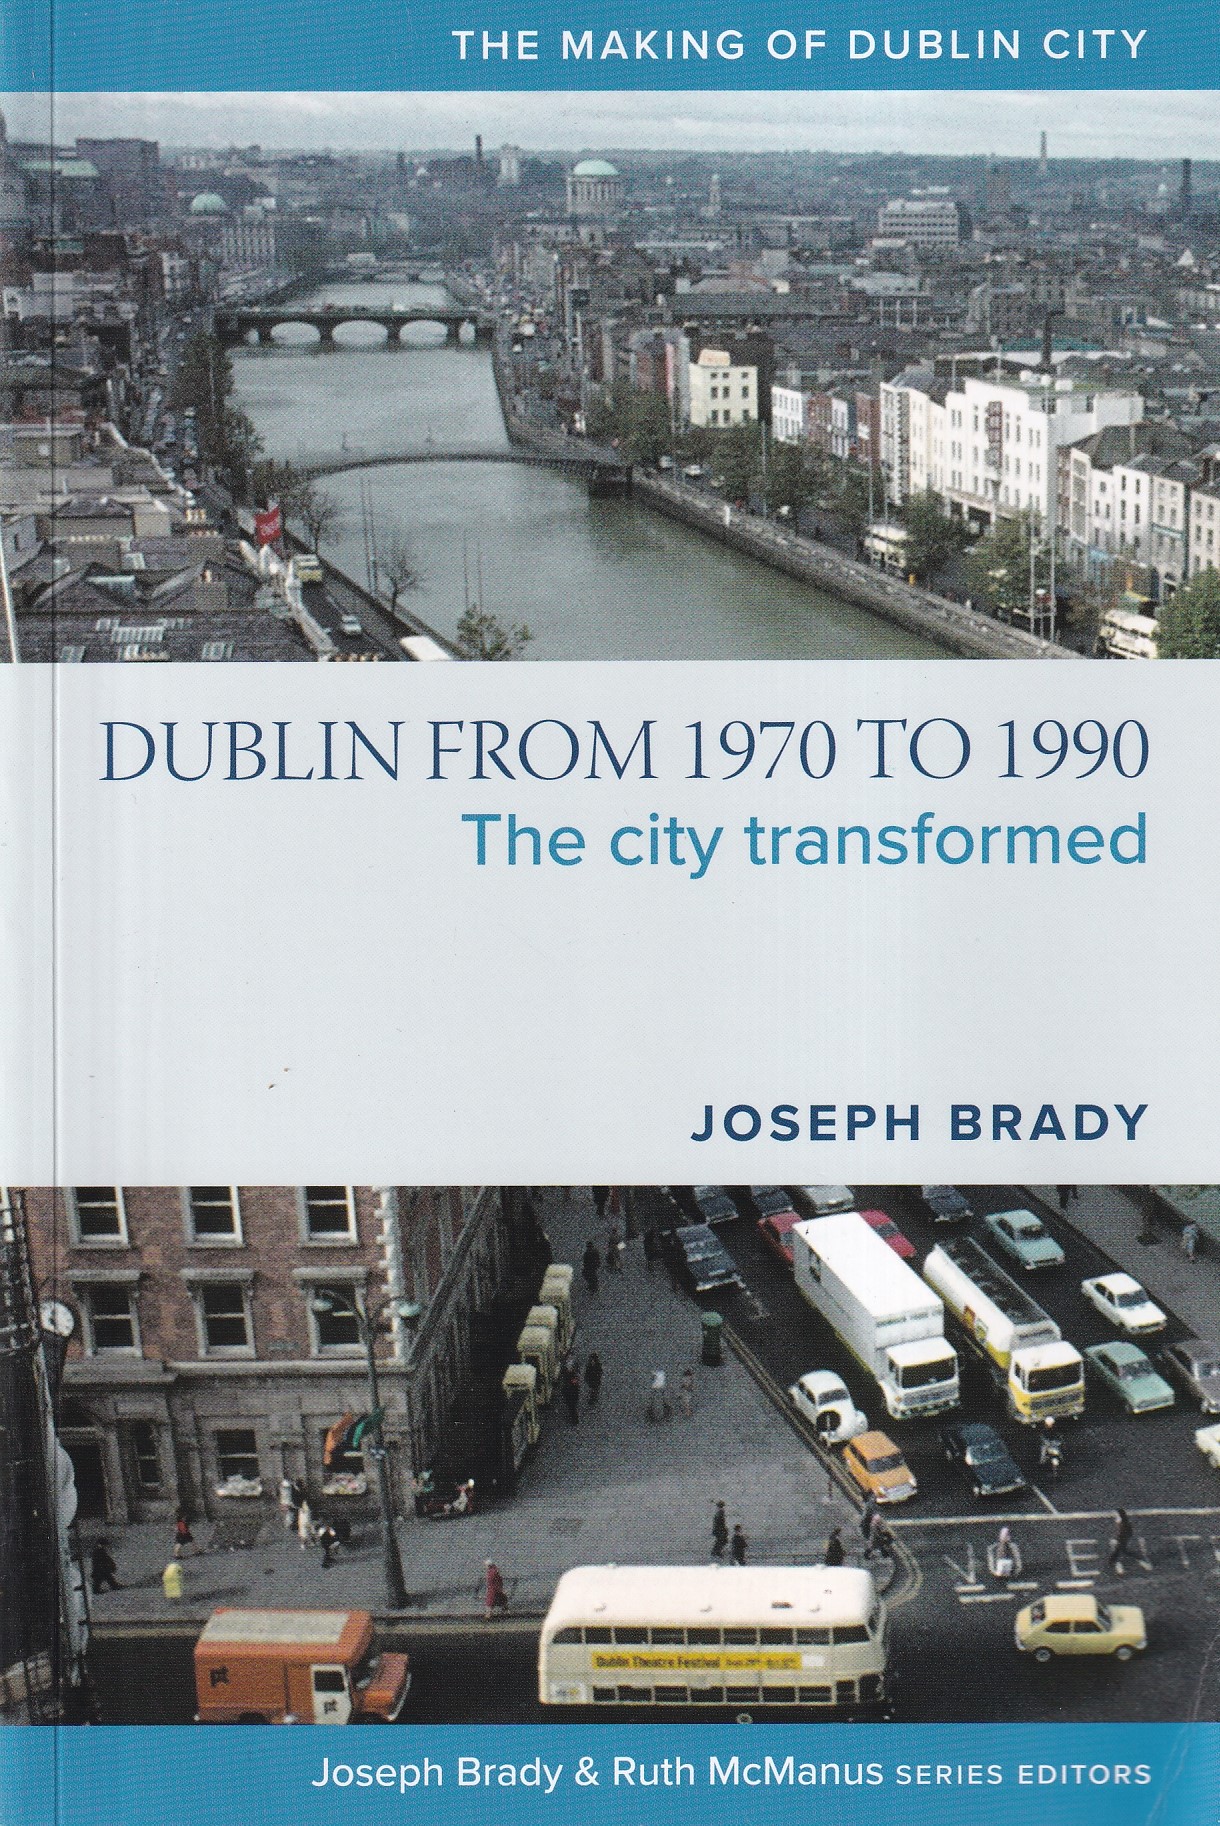 Dublin from 1970 to 1990: The City Transformed by Joseph Brady